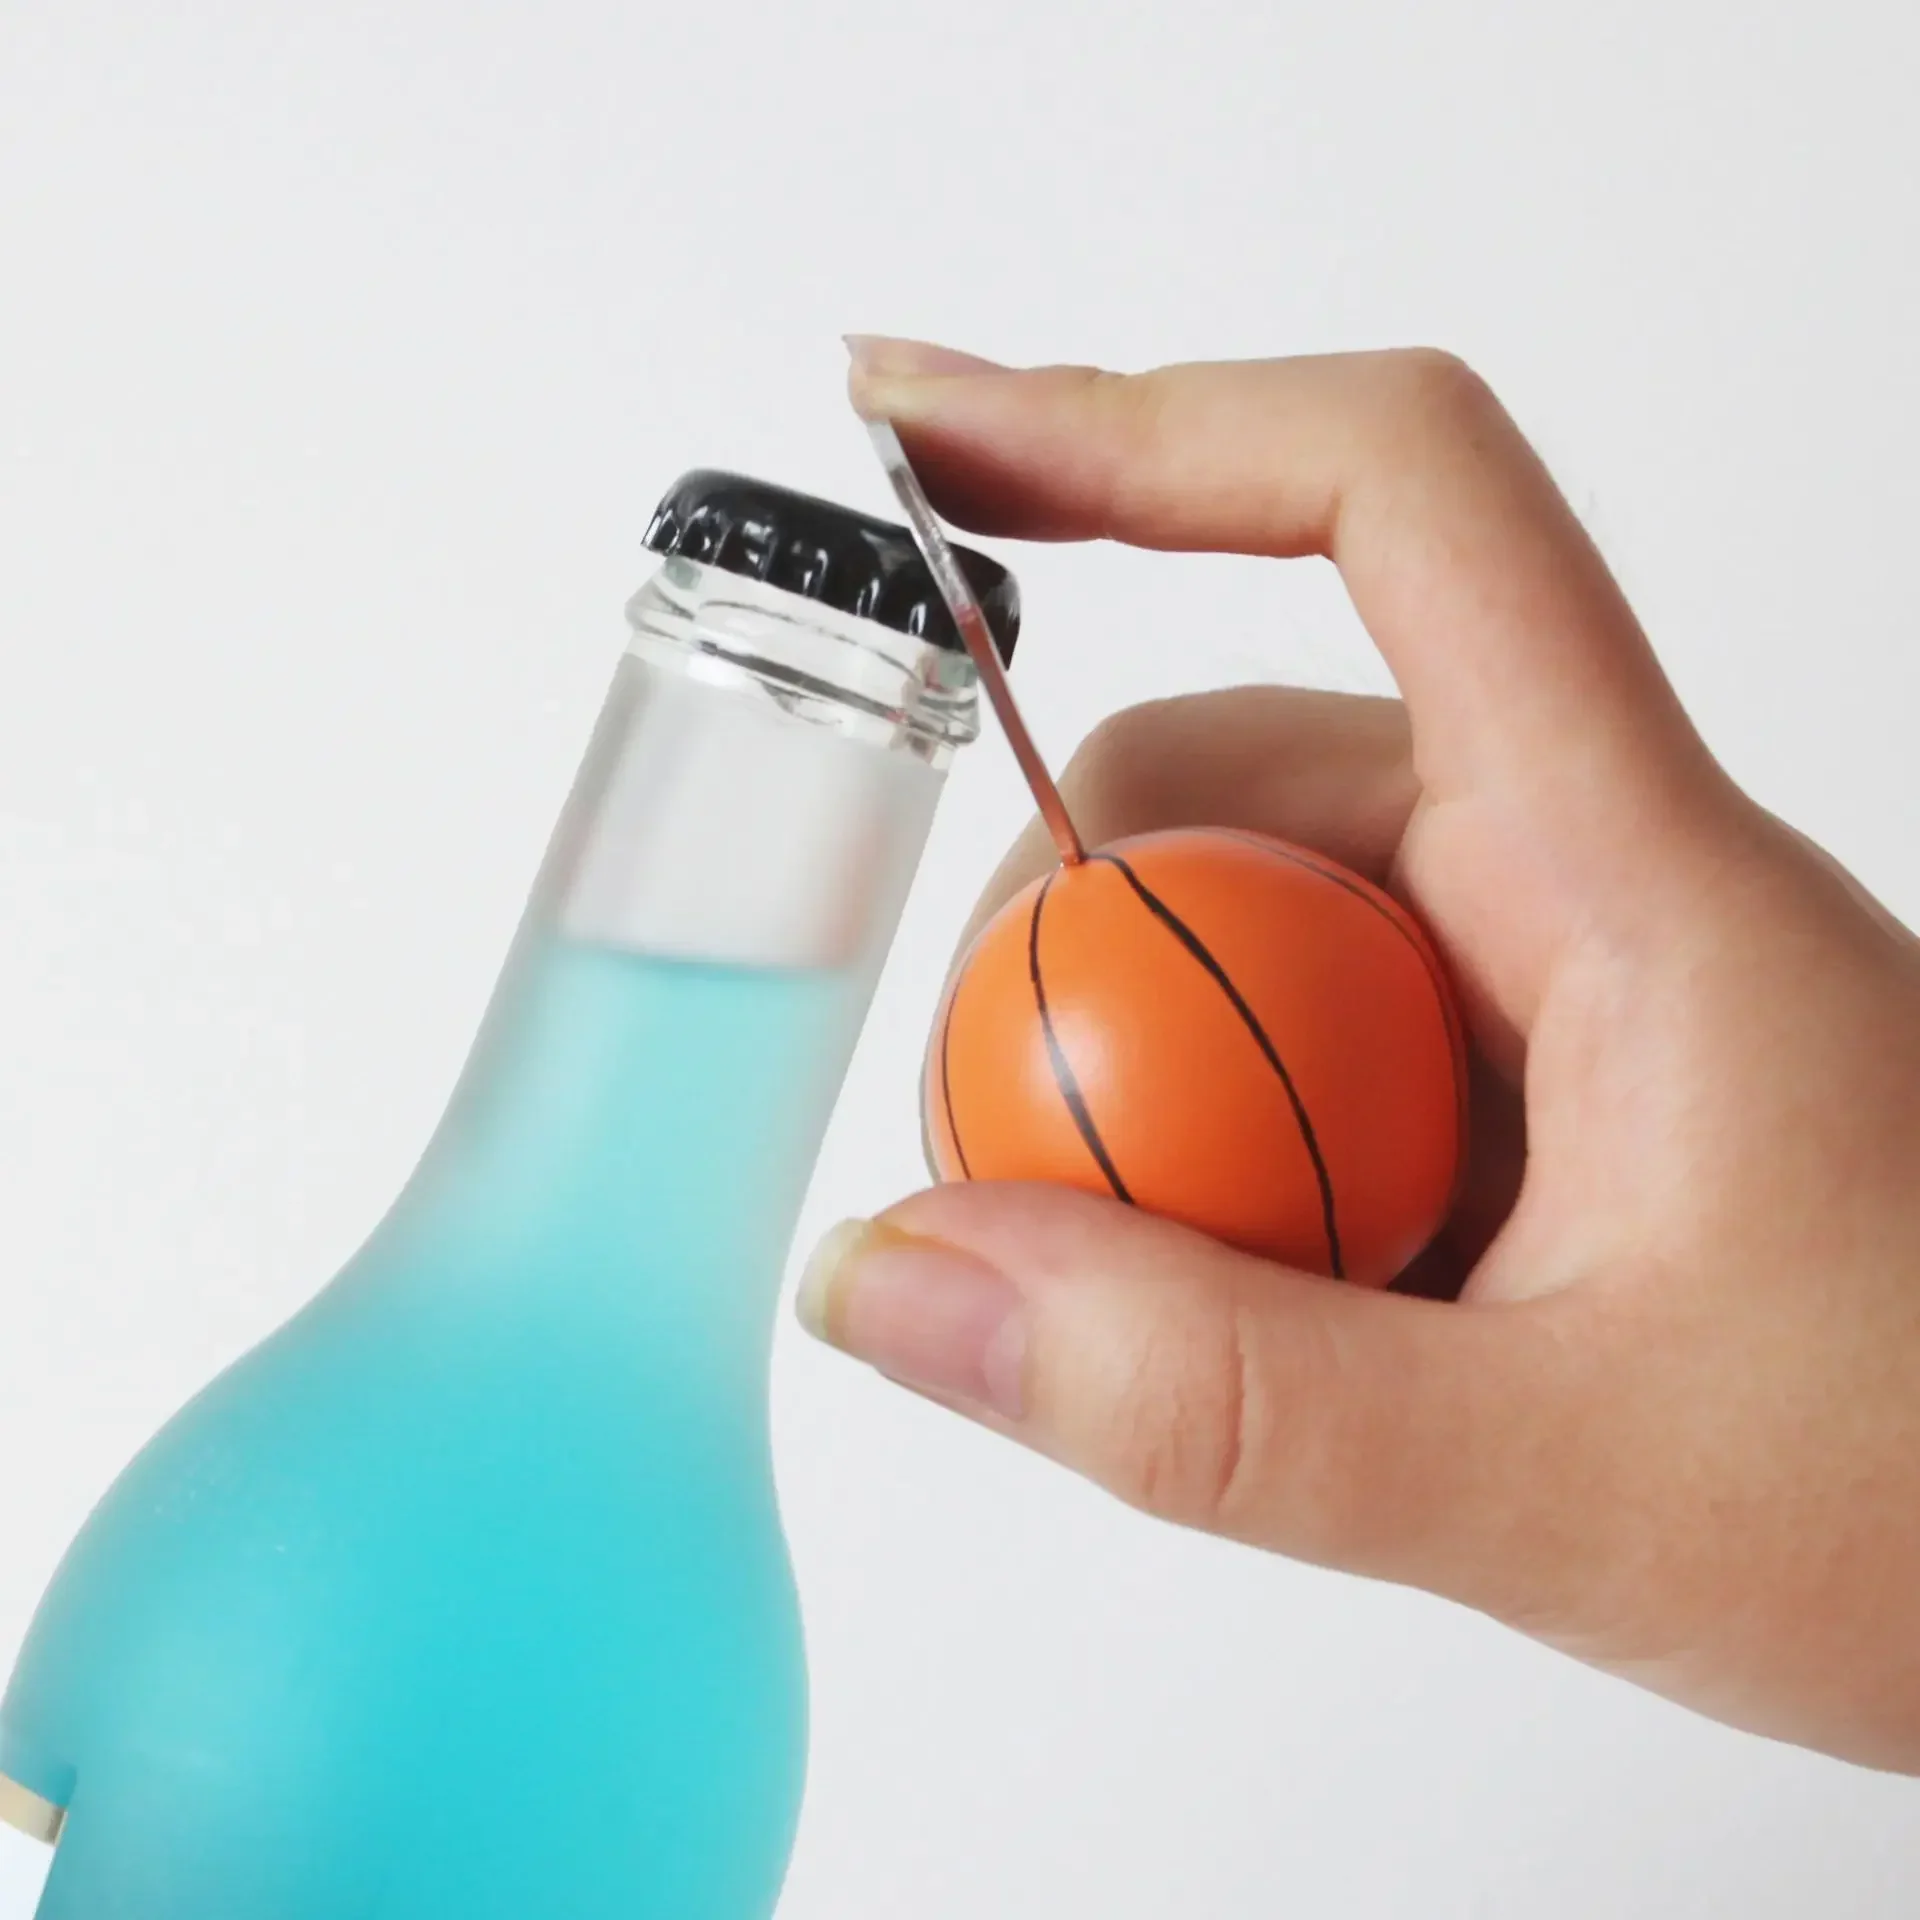 https://ae01.alicdn.com/kf/S64c3188367574a66971f39158b47e4baZ/Creative-New-Bottle-Opener-Football-Basketball-Model-Beer-Bottle-Openers-Refrigerator-Sticker-Function-Kitchen-Tools-Gadgets.jpg